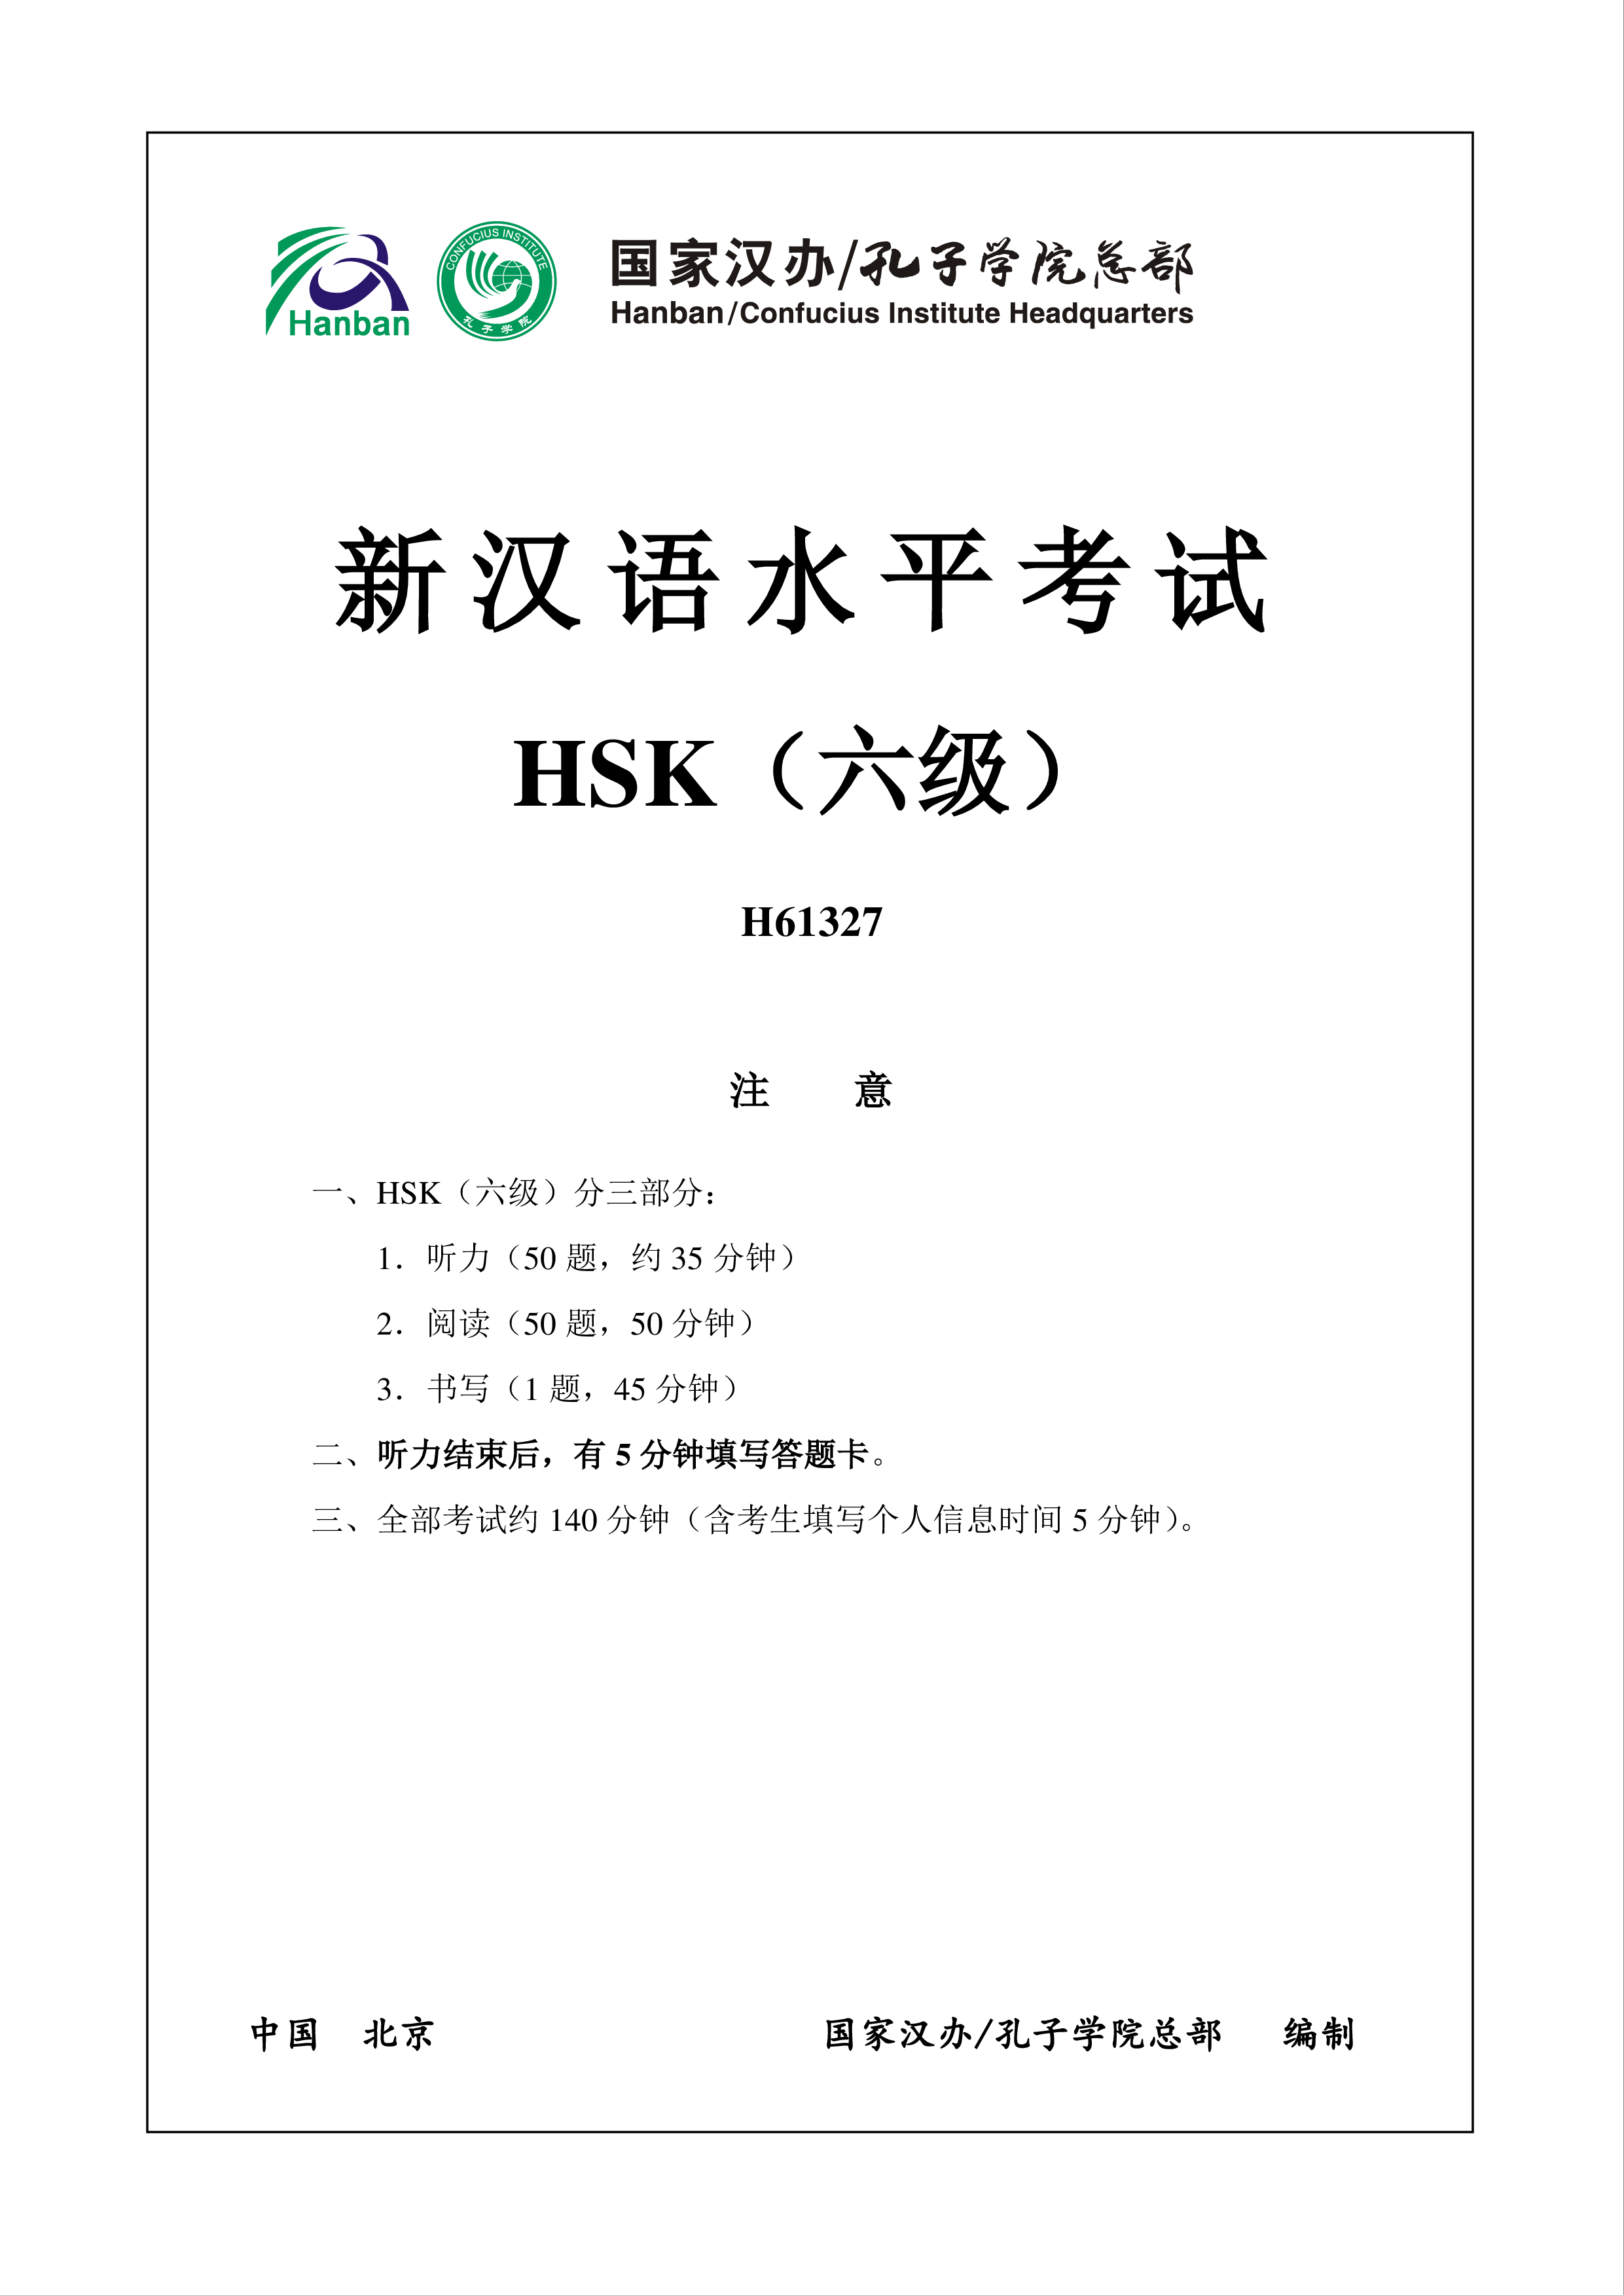 hsk6 chinese exam incl audio, answers h61327 plantilla imagen principal